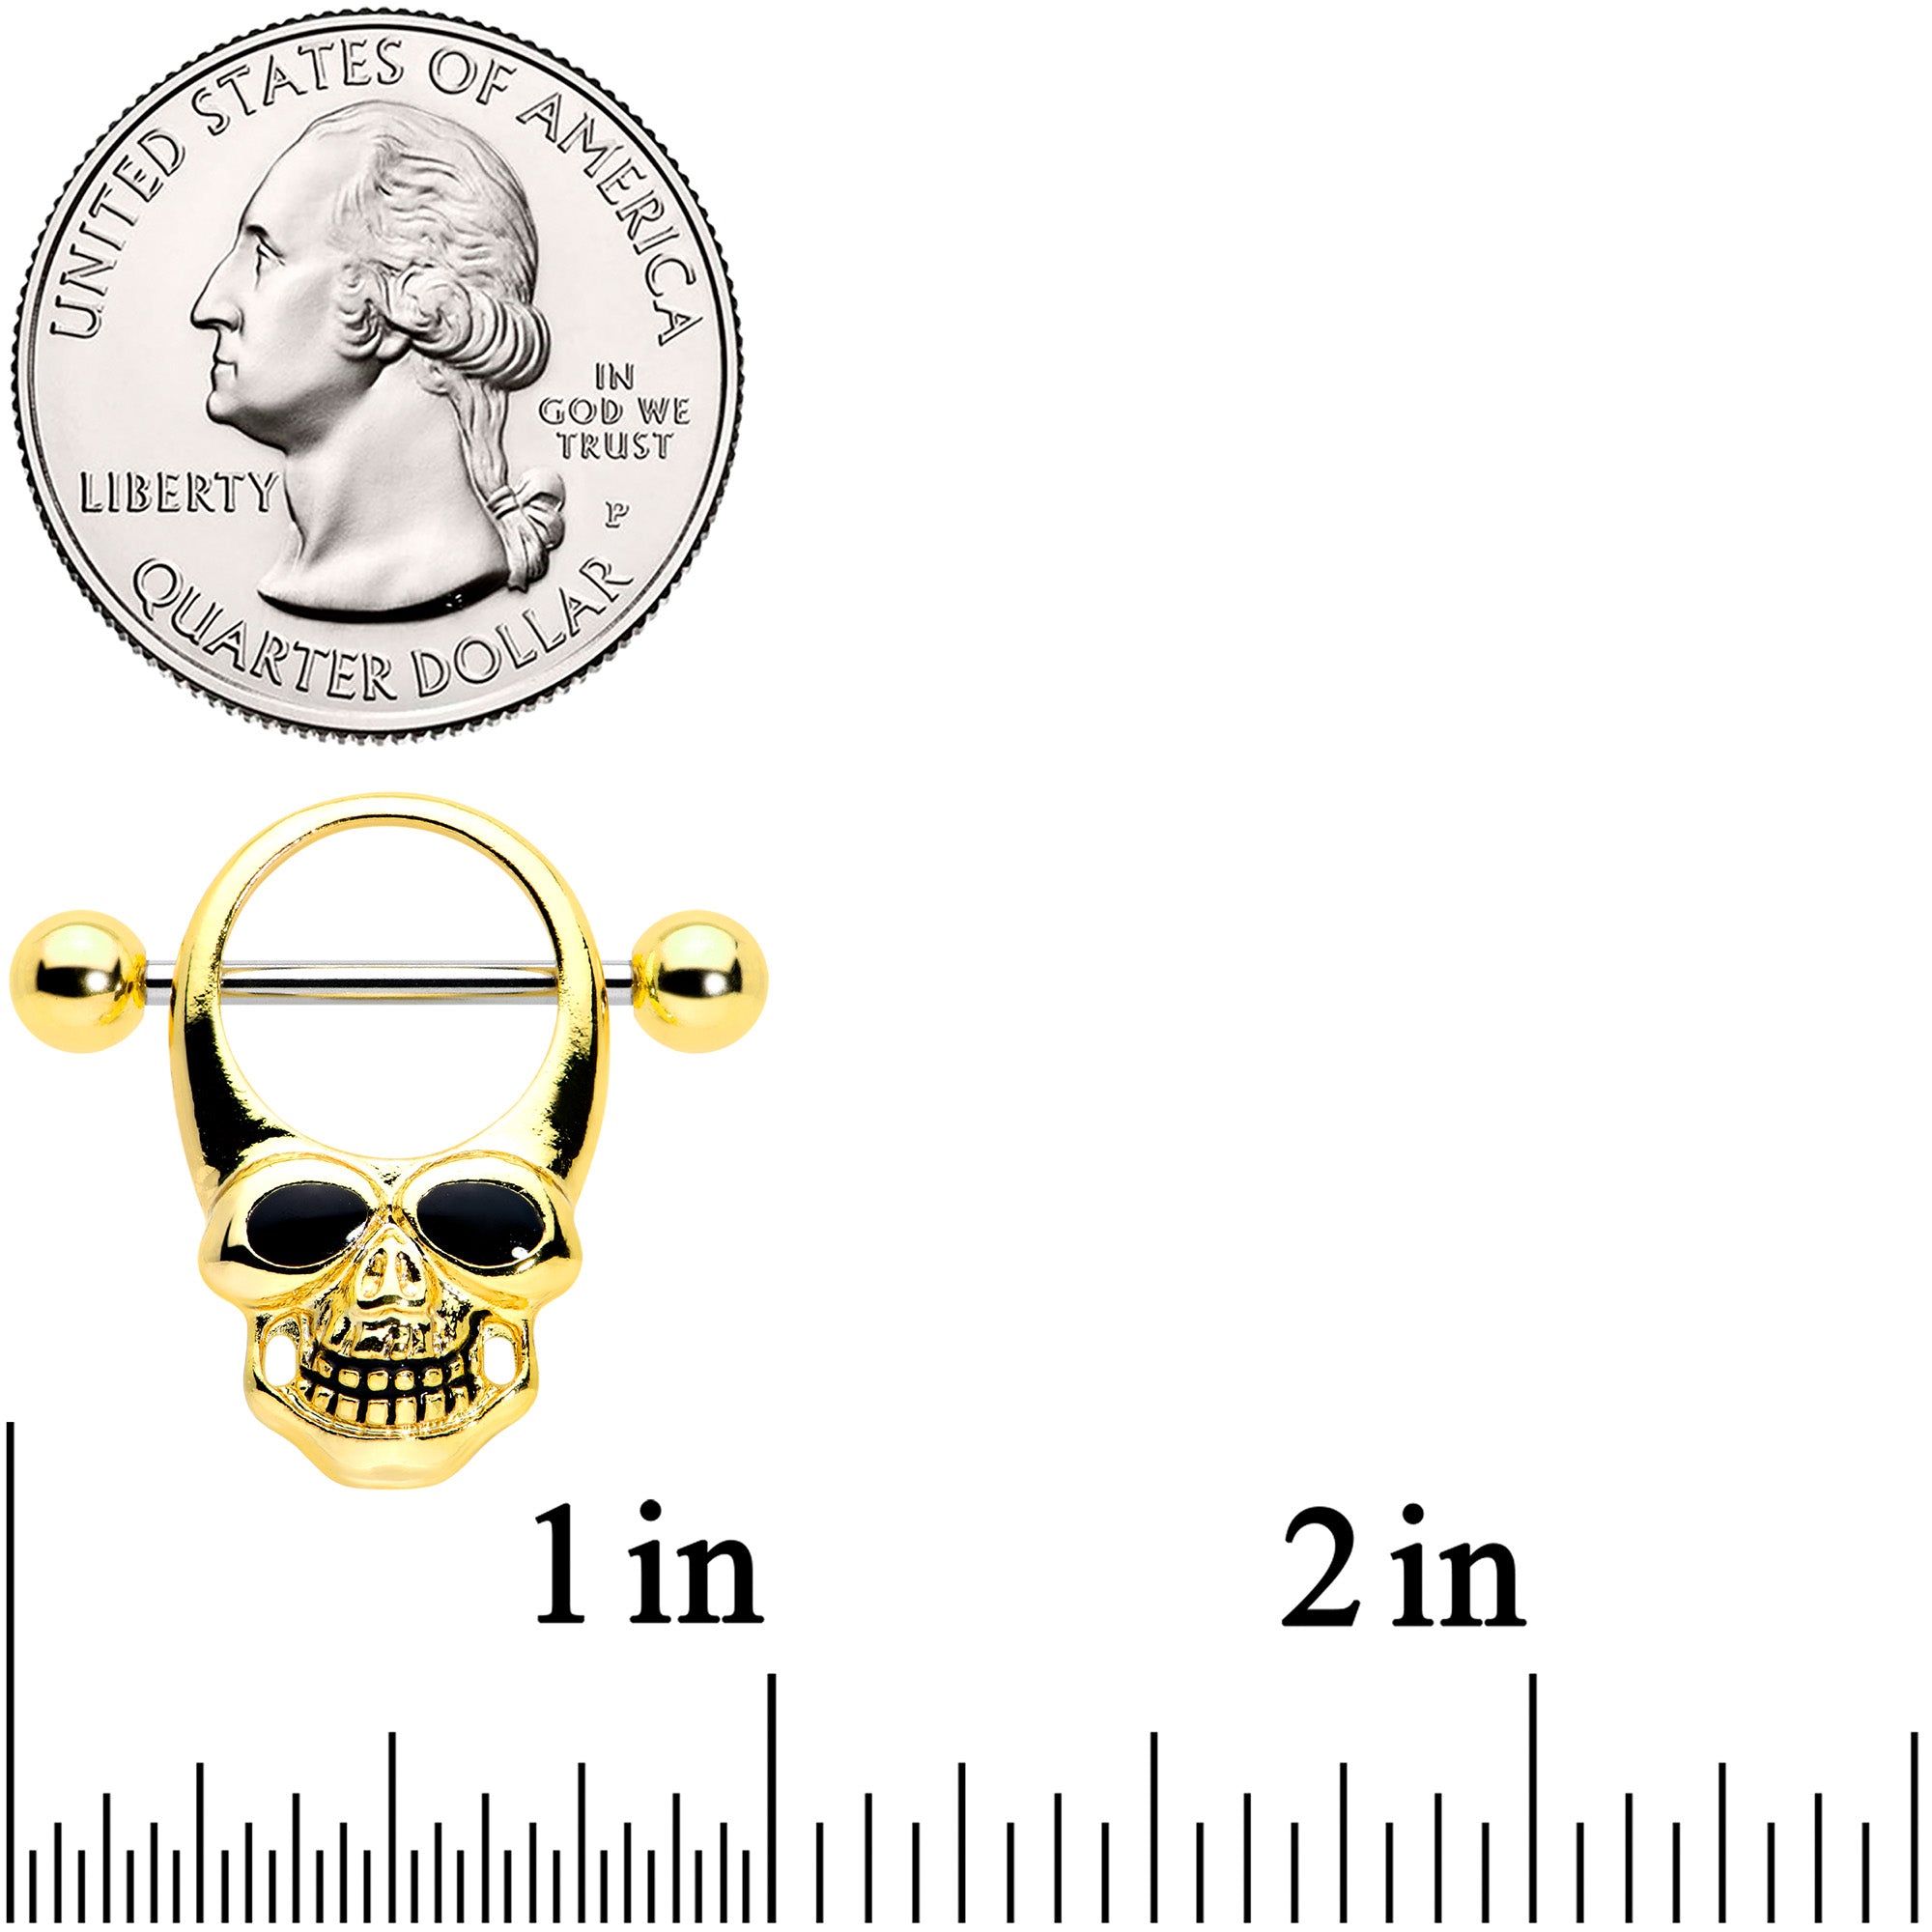 14 Gauge 1/2 Gold Tone Grinning Skull Nipple Shield Set